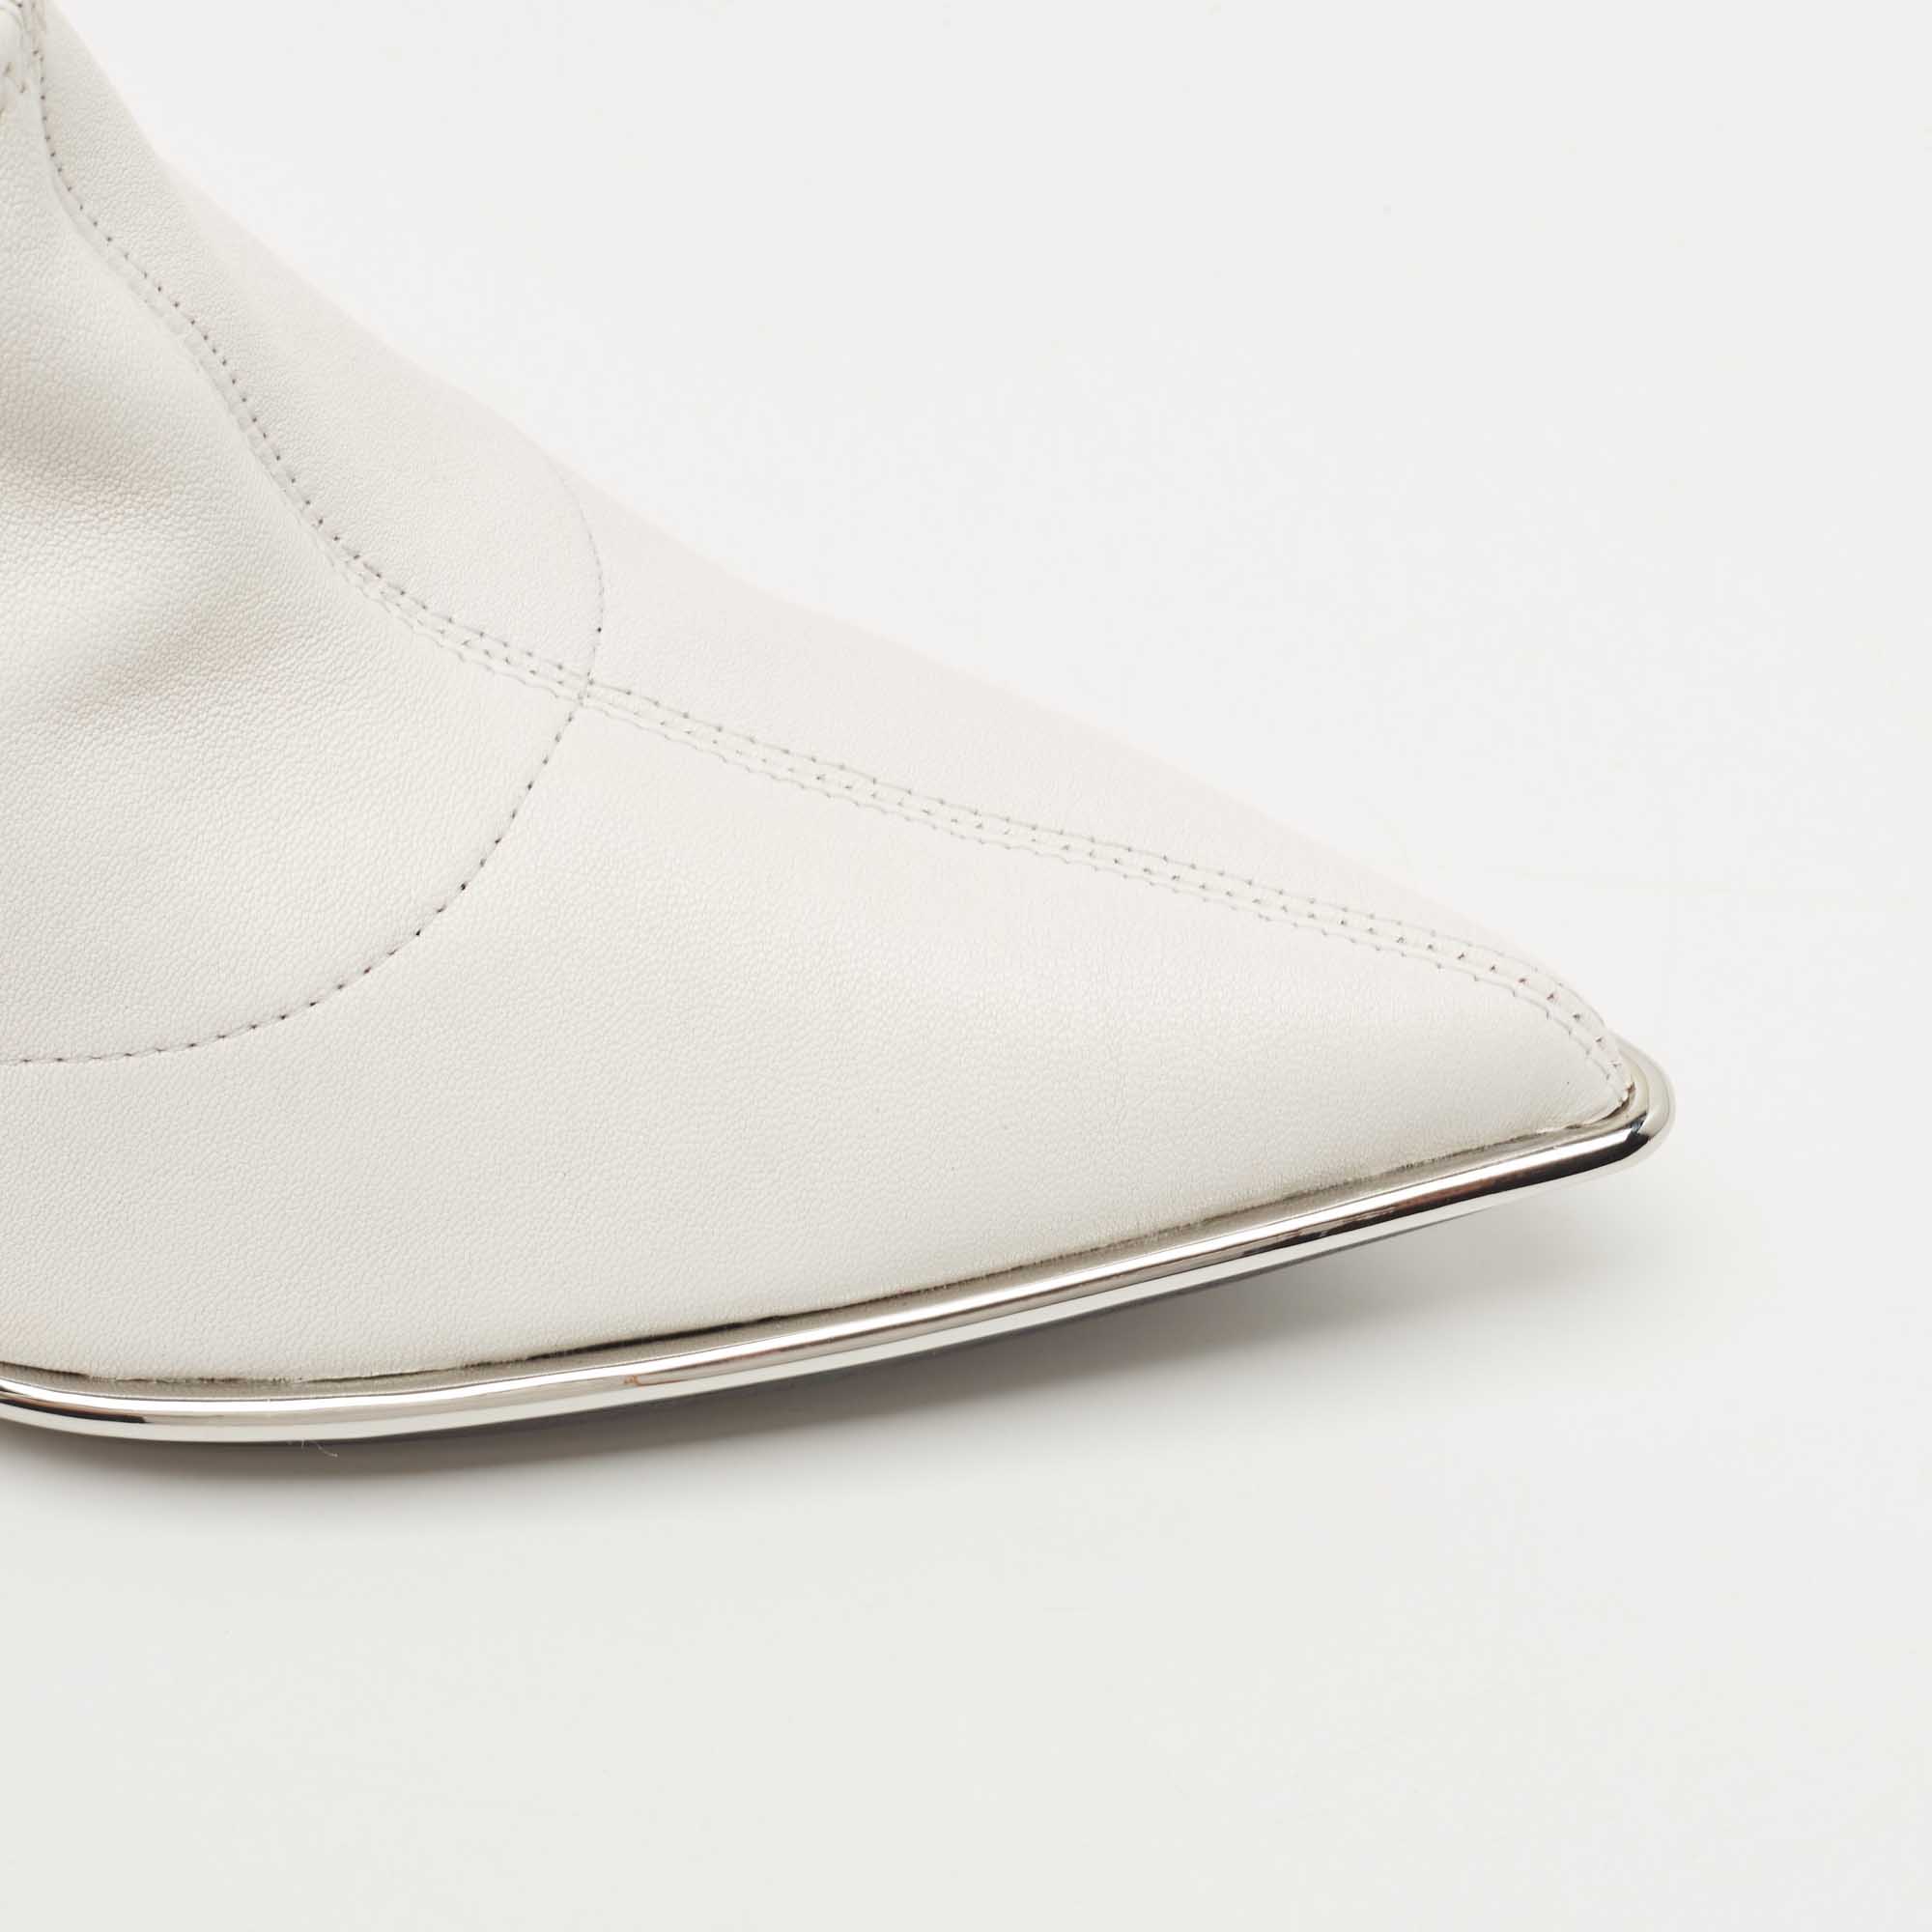 Alexander Wang White Leather Metal Trim Cara Stretch Napa Heels Boots Size 39.5